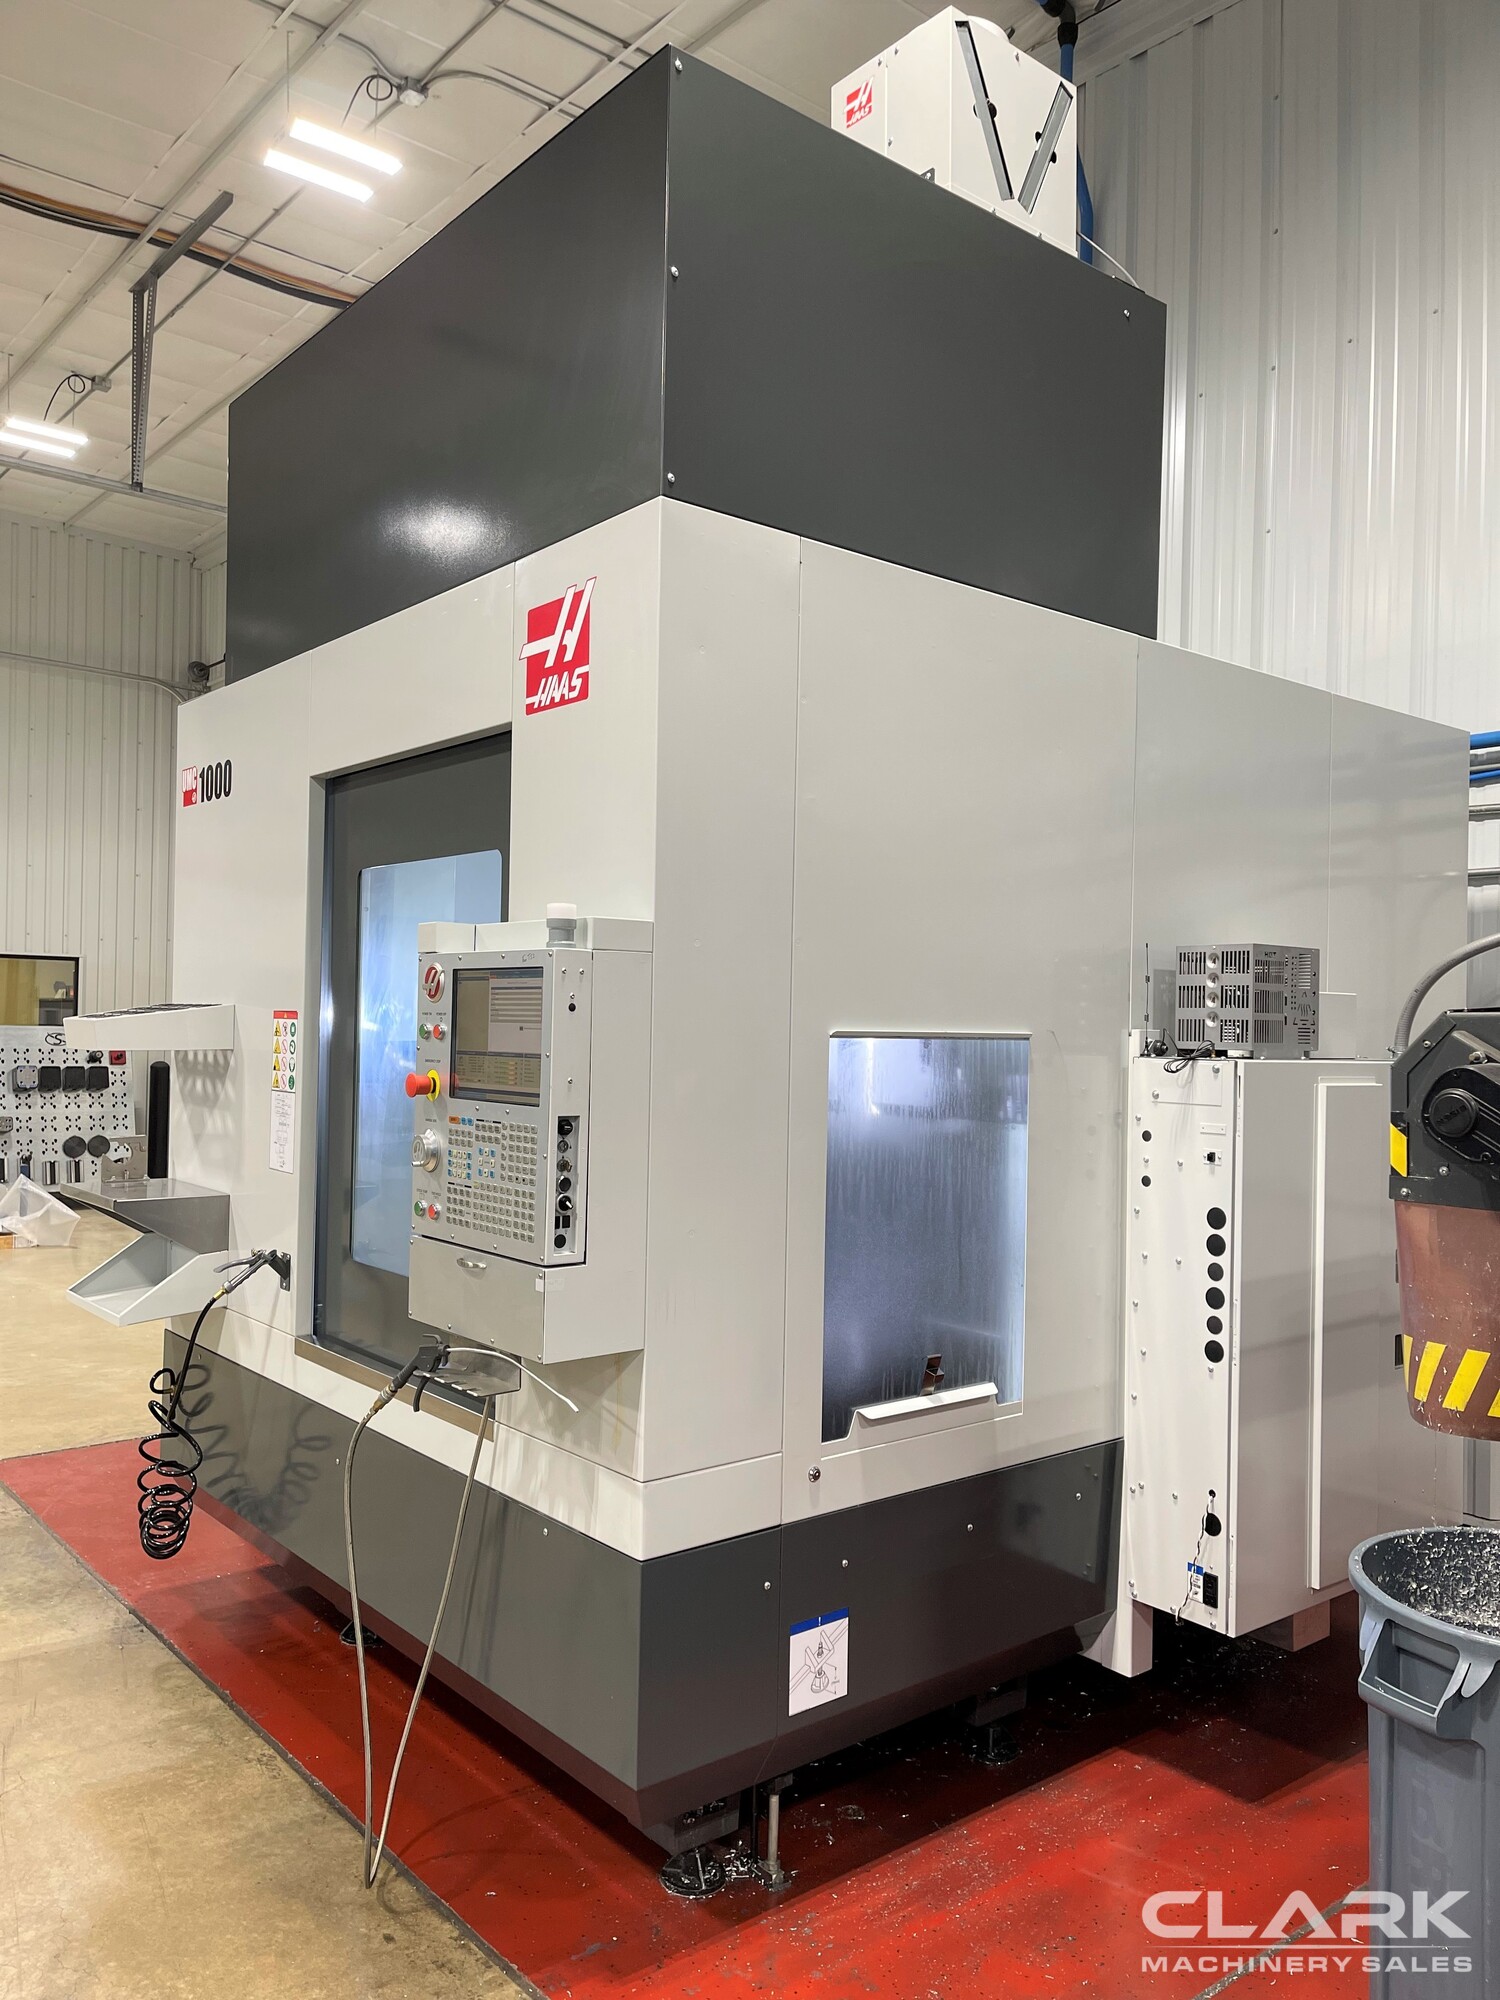 2018 HAAS UMC-1000 Universal Machining Centers | Clark Machinery Sales, LLC